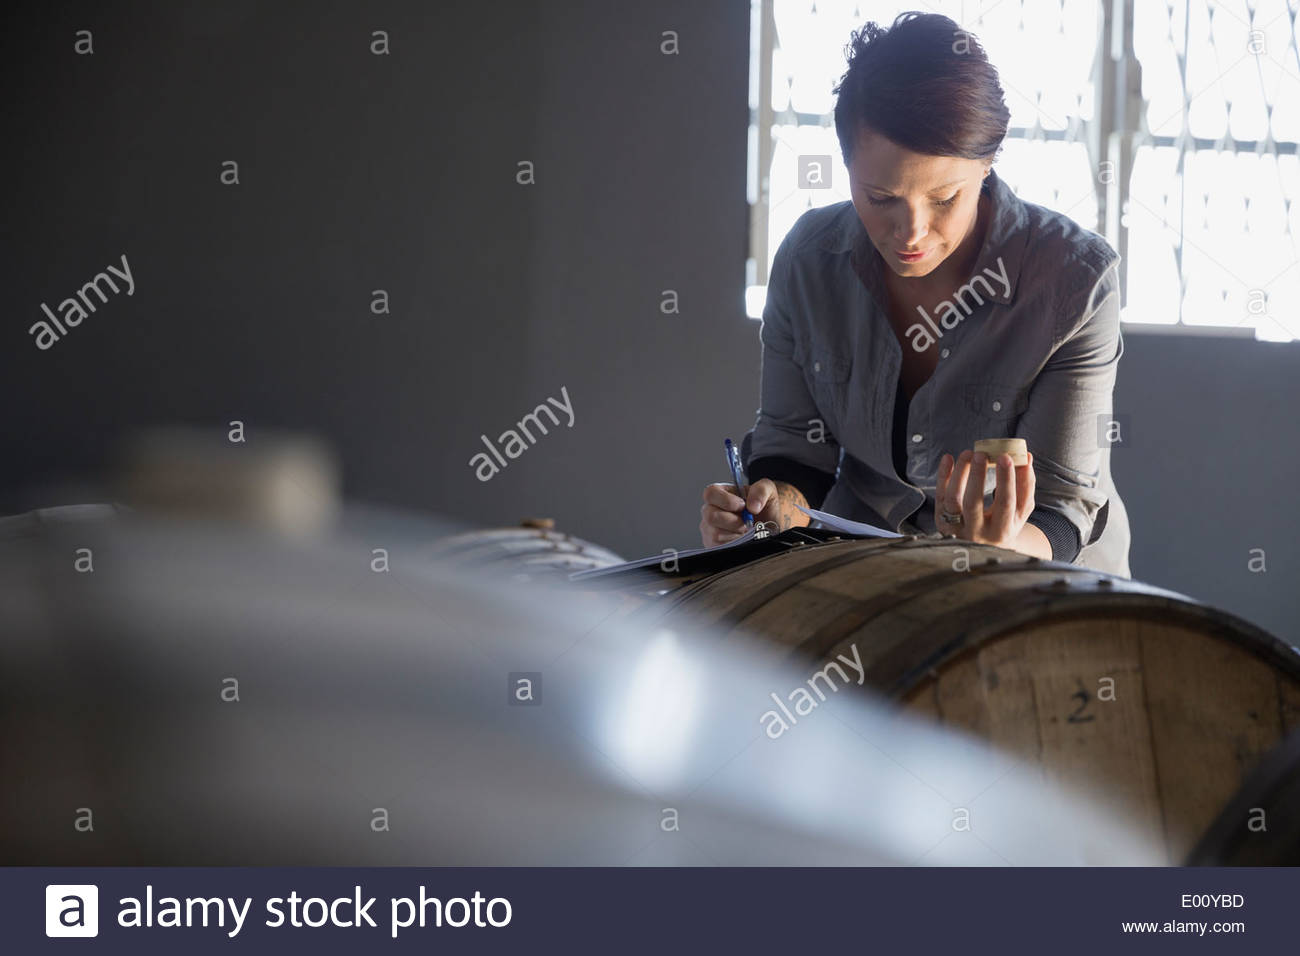 Brewery worker looking into beer barrel Stock Photo